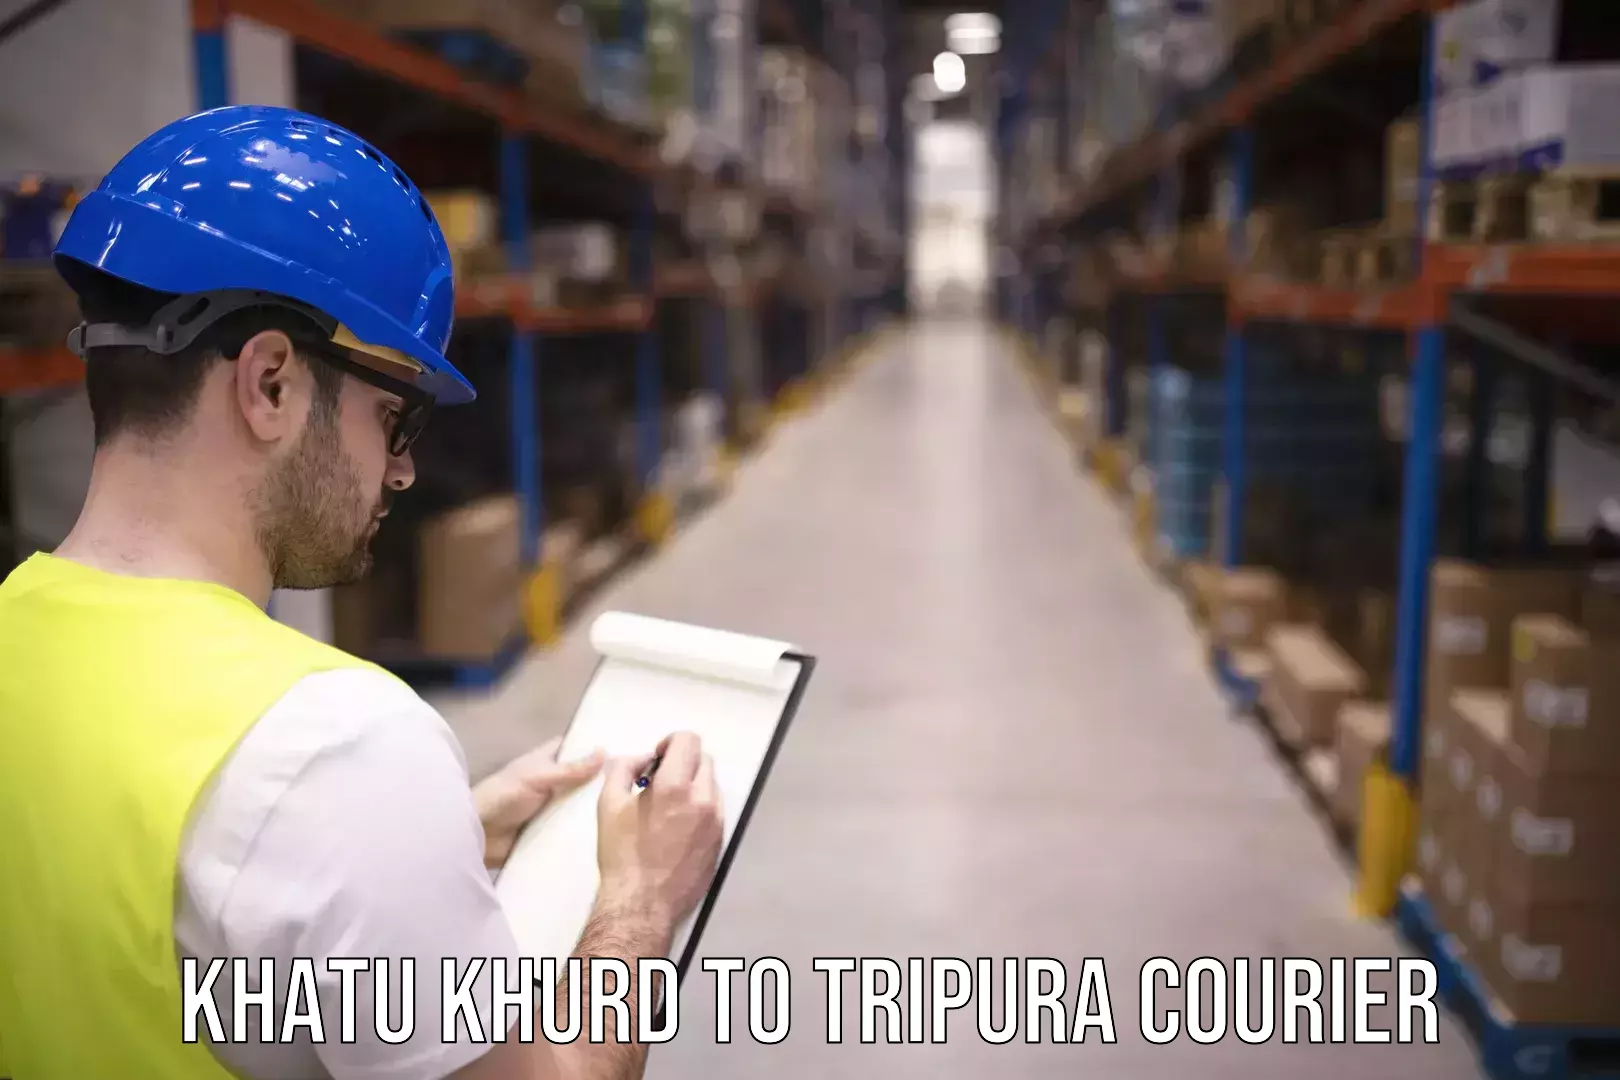 Courier services Khatu Khurd to Tripura